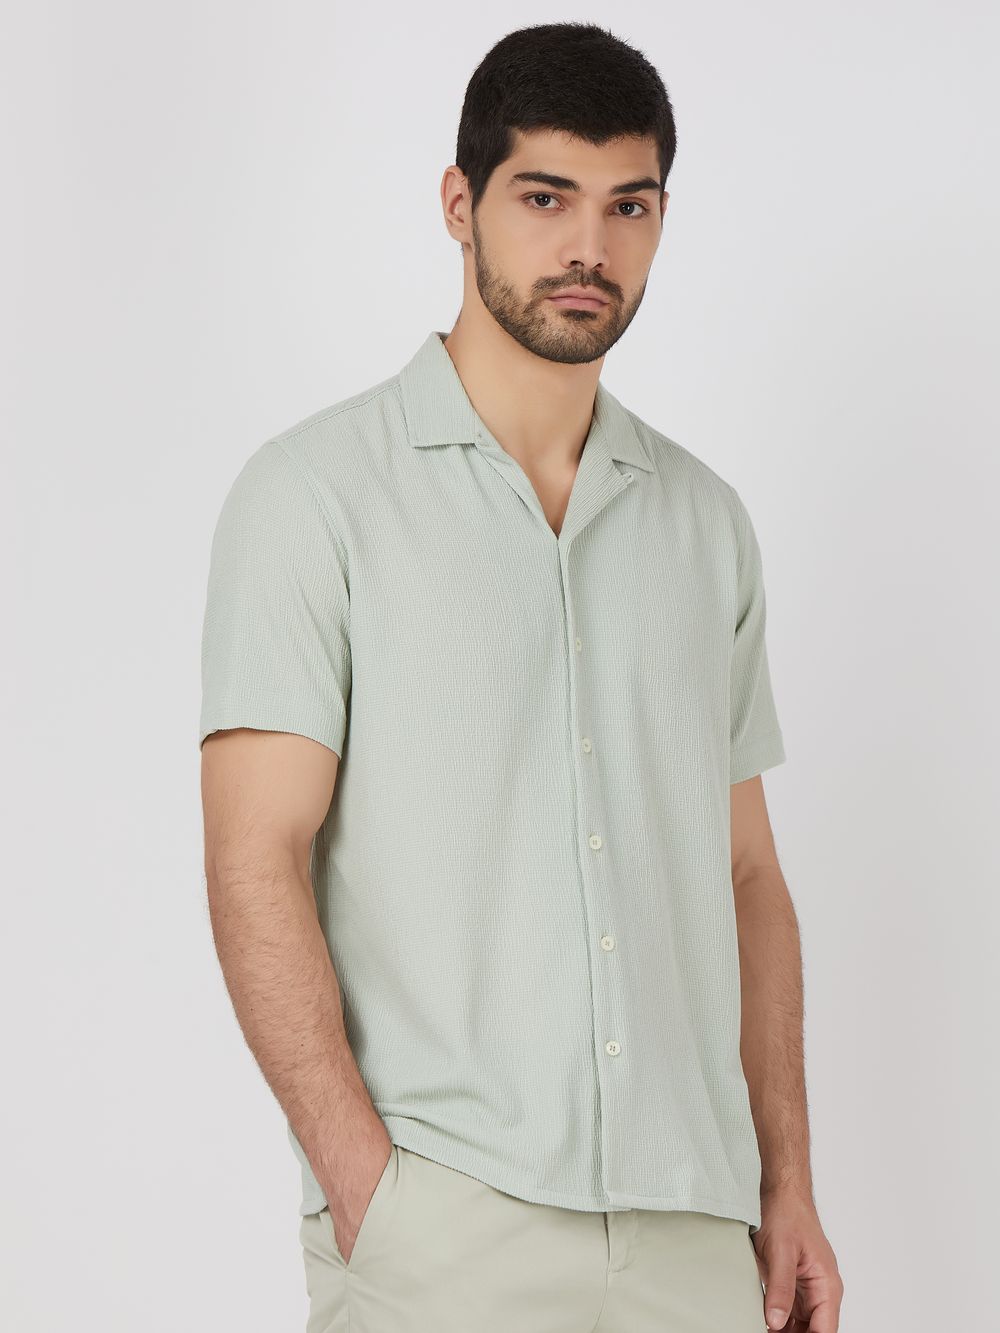 Light Green Textured Plain Relaxed Fit Casual Shirt